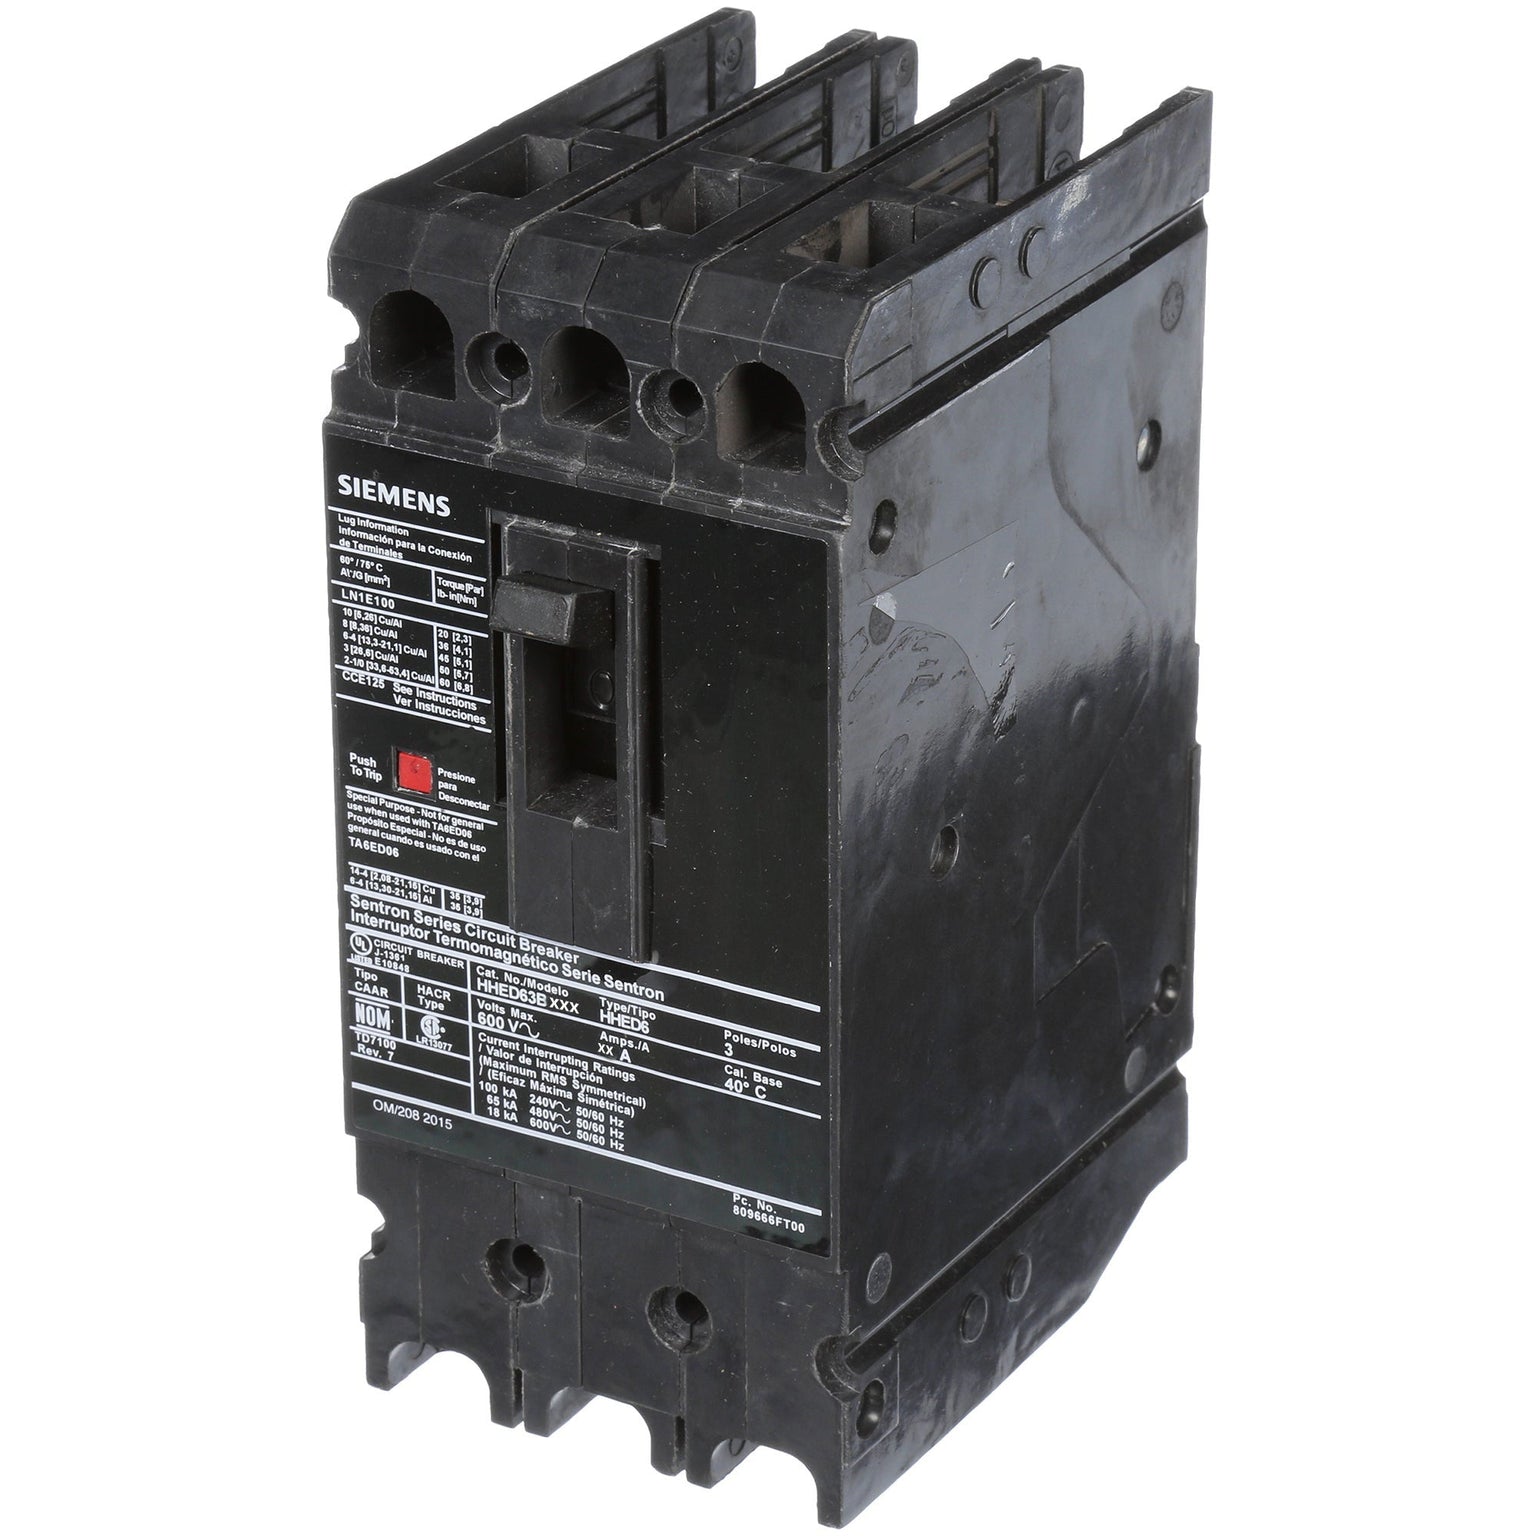 HHED63B045 - Siemens - Molded Case Circuit Breaker